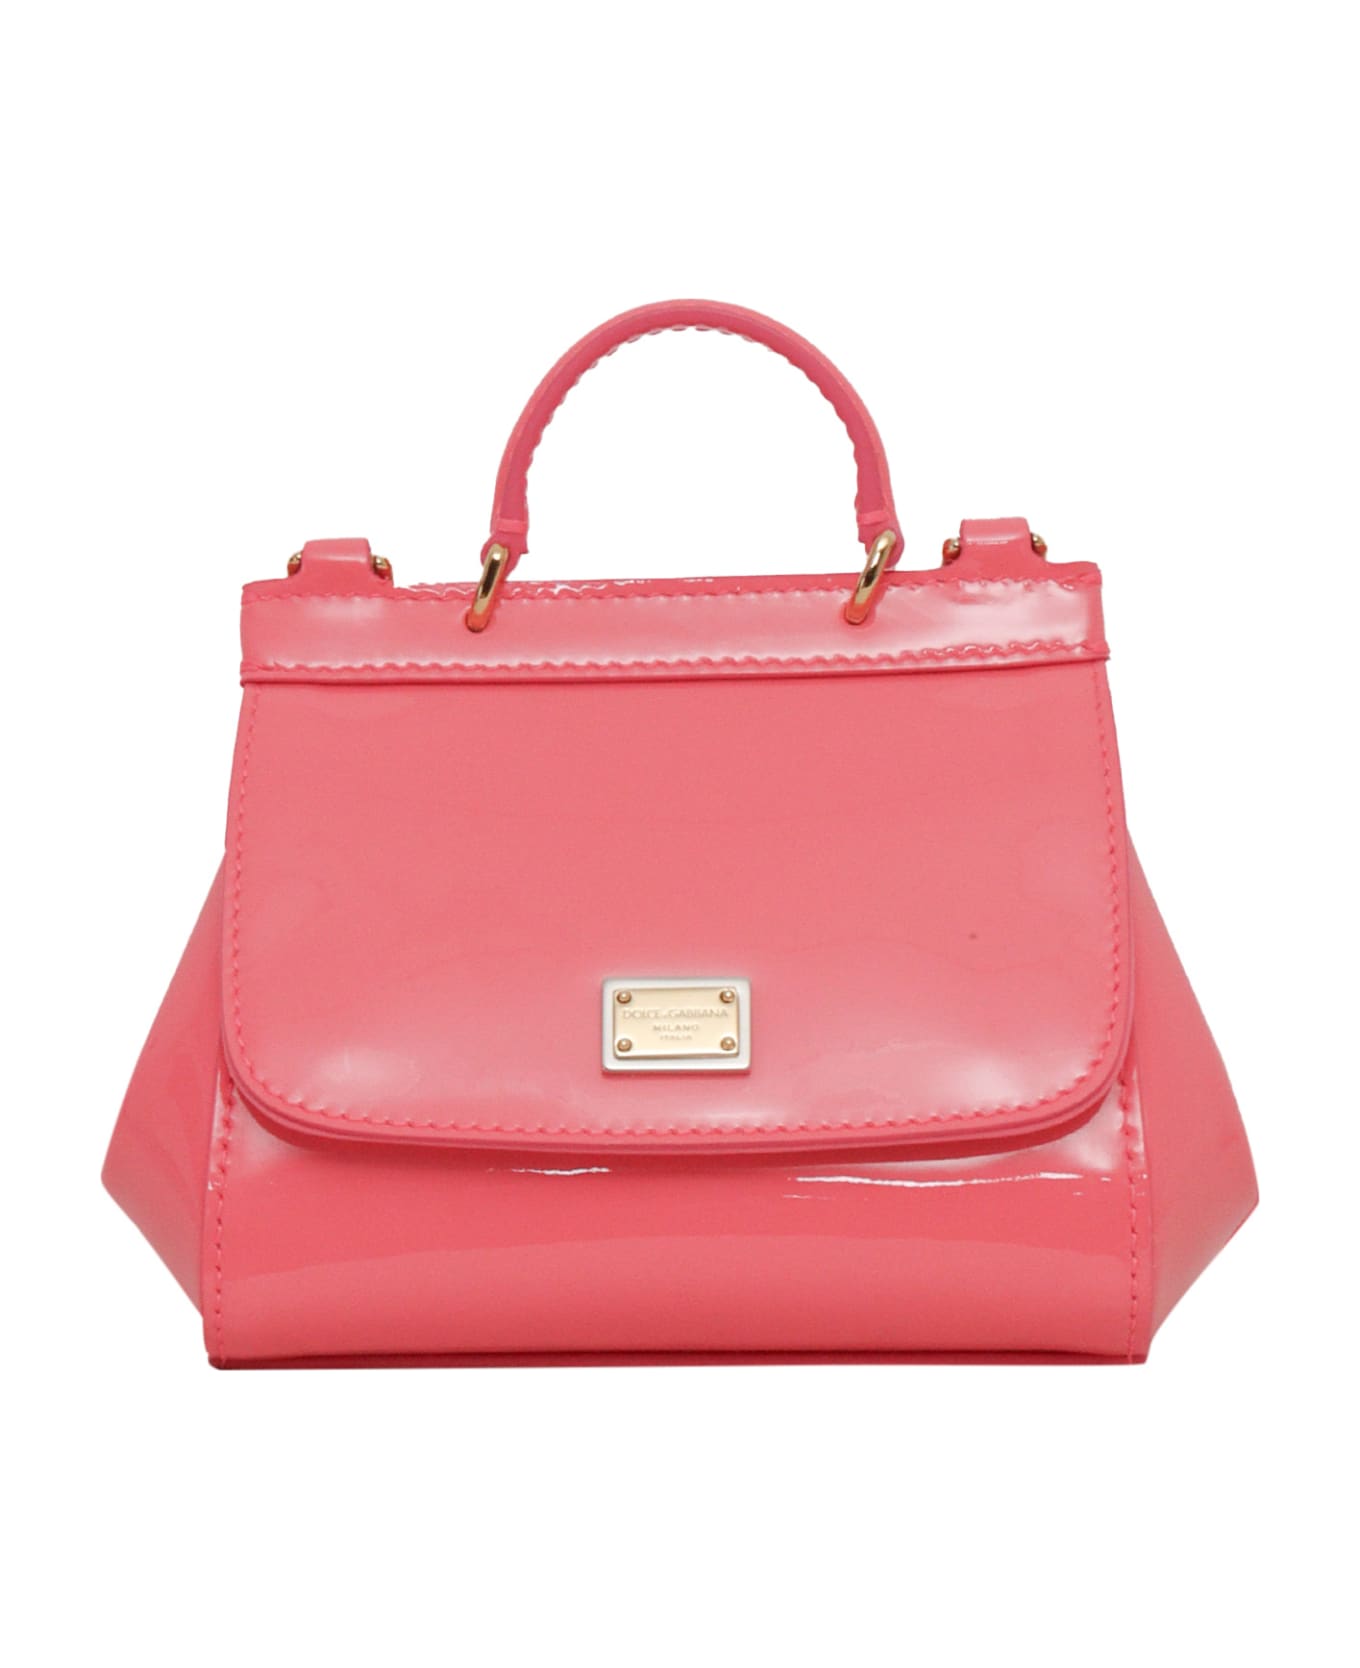 Dolce & Gabbana Pink D&g Leather Bag - FUCHSIA